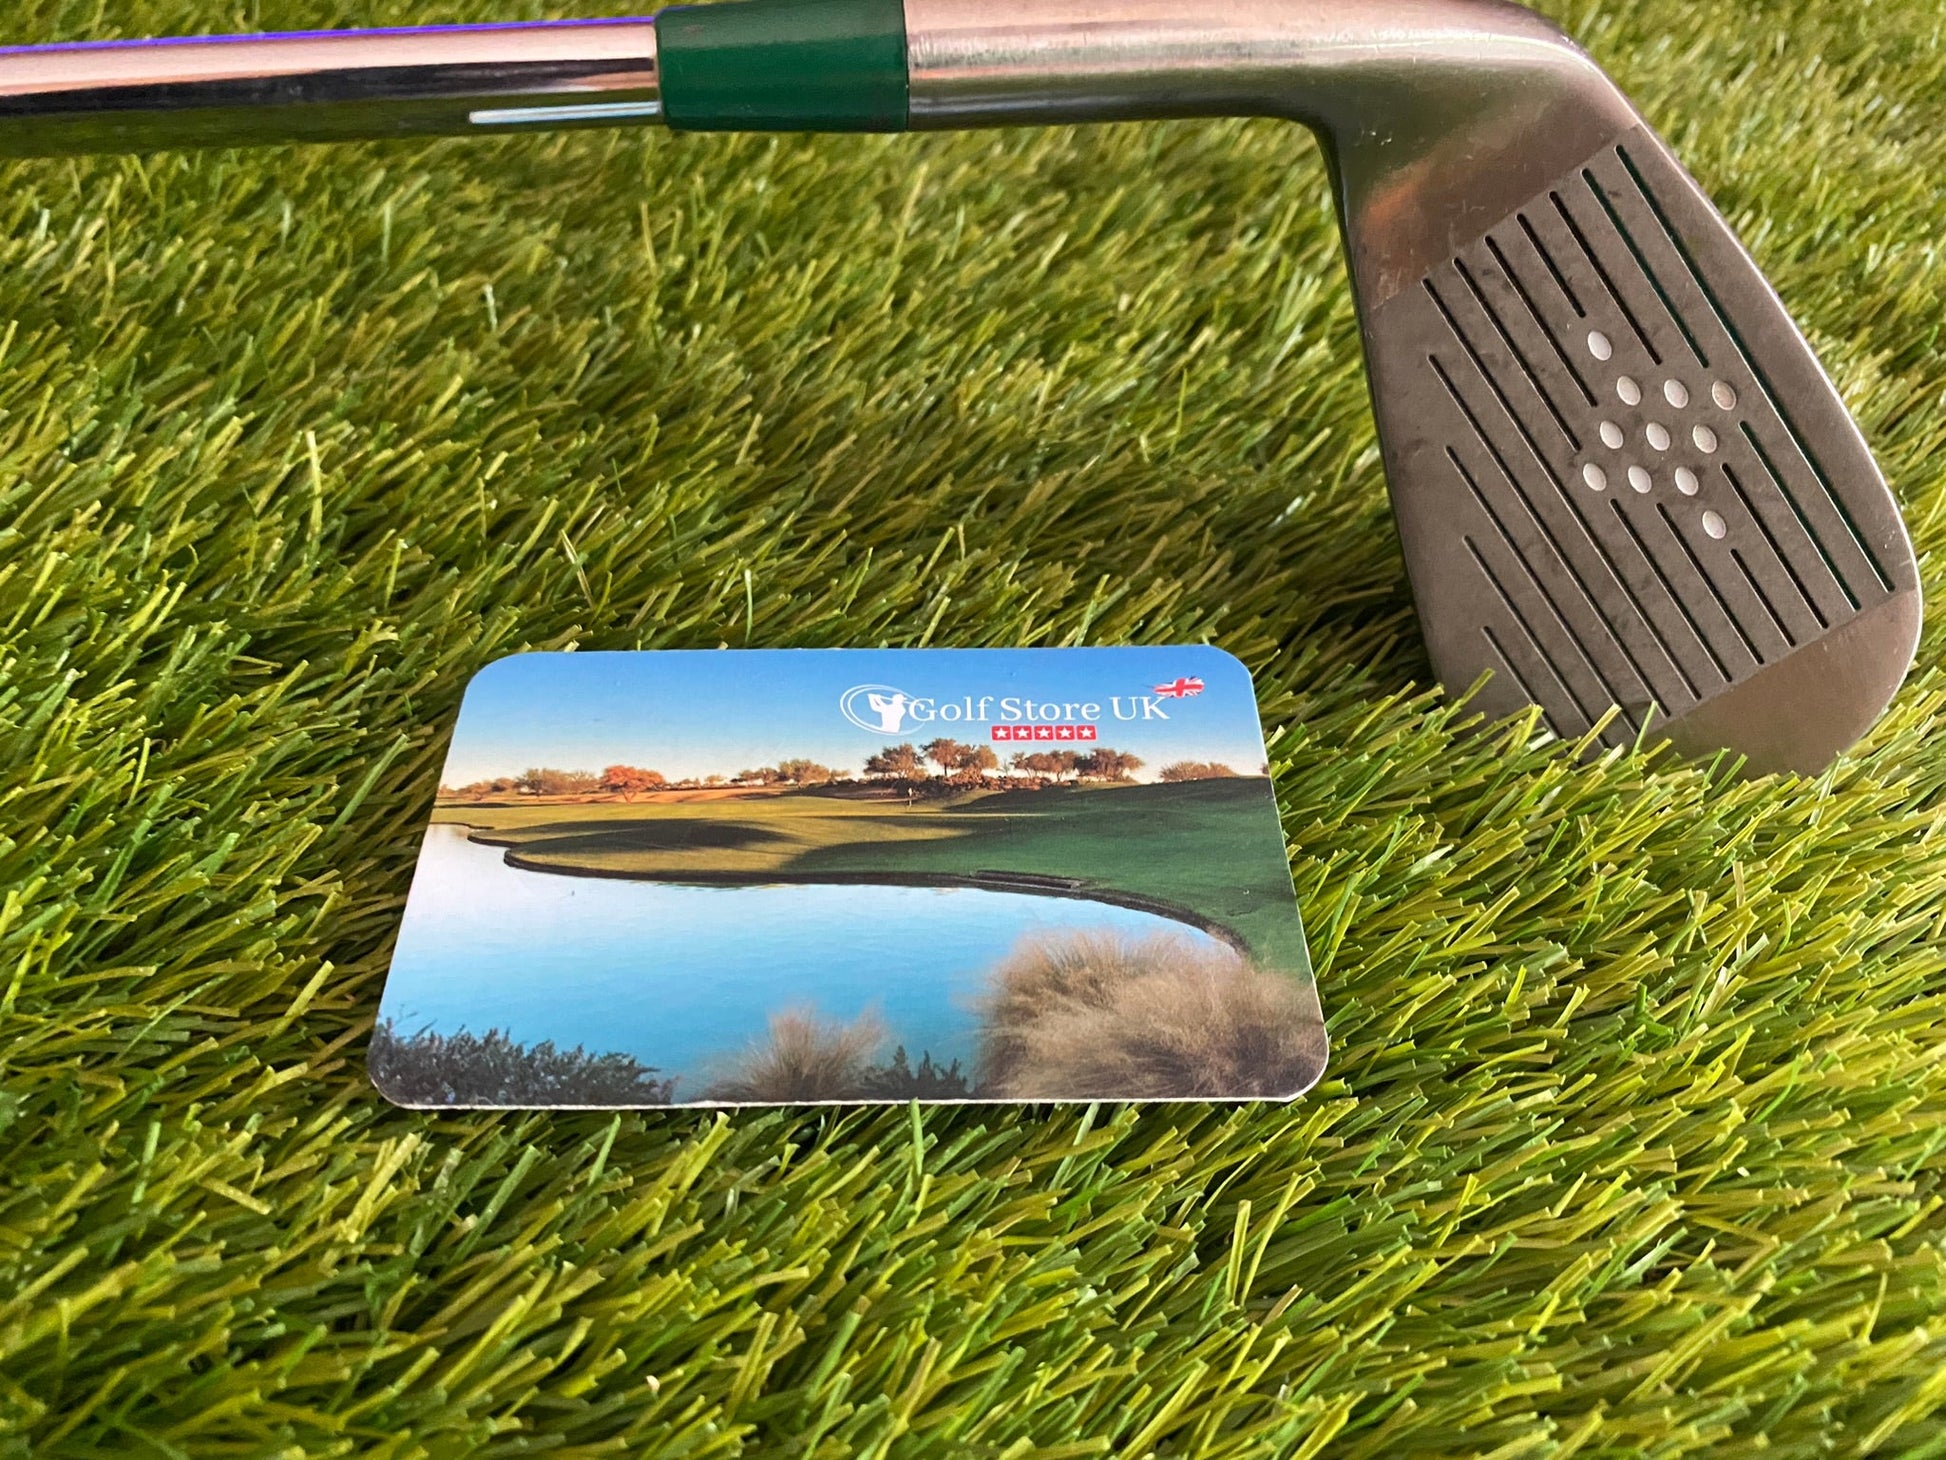 Wilson Snead Driving 1 Iron, Stunning club - Golf Store UK